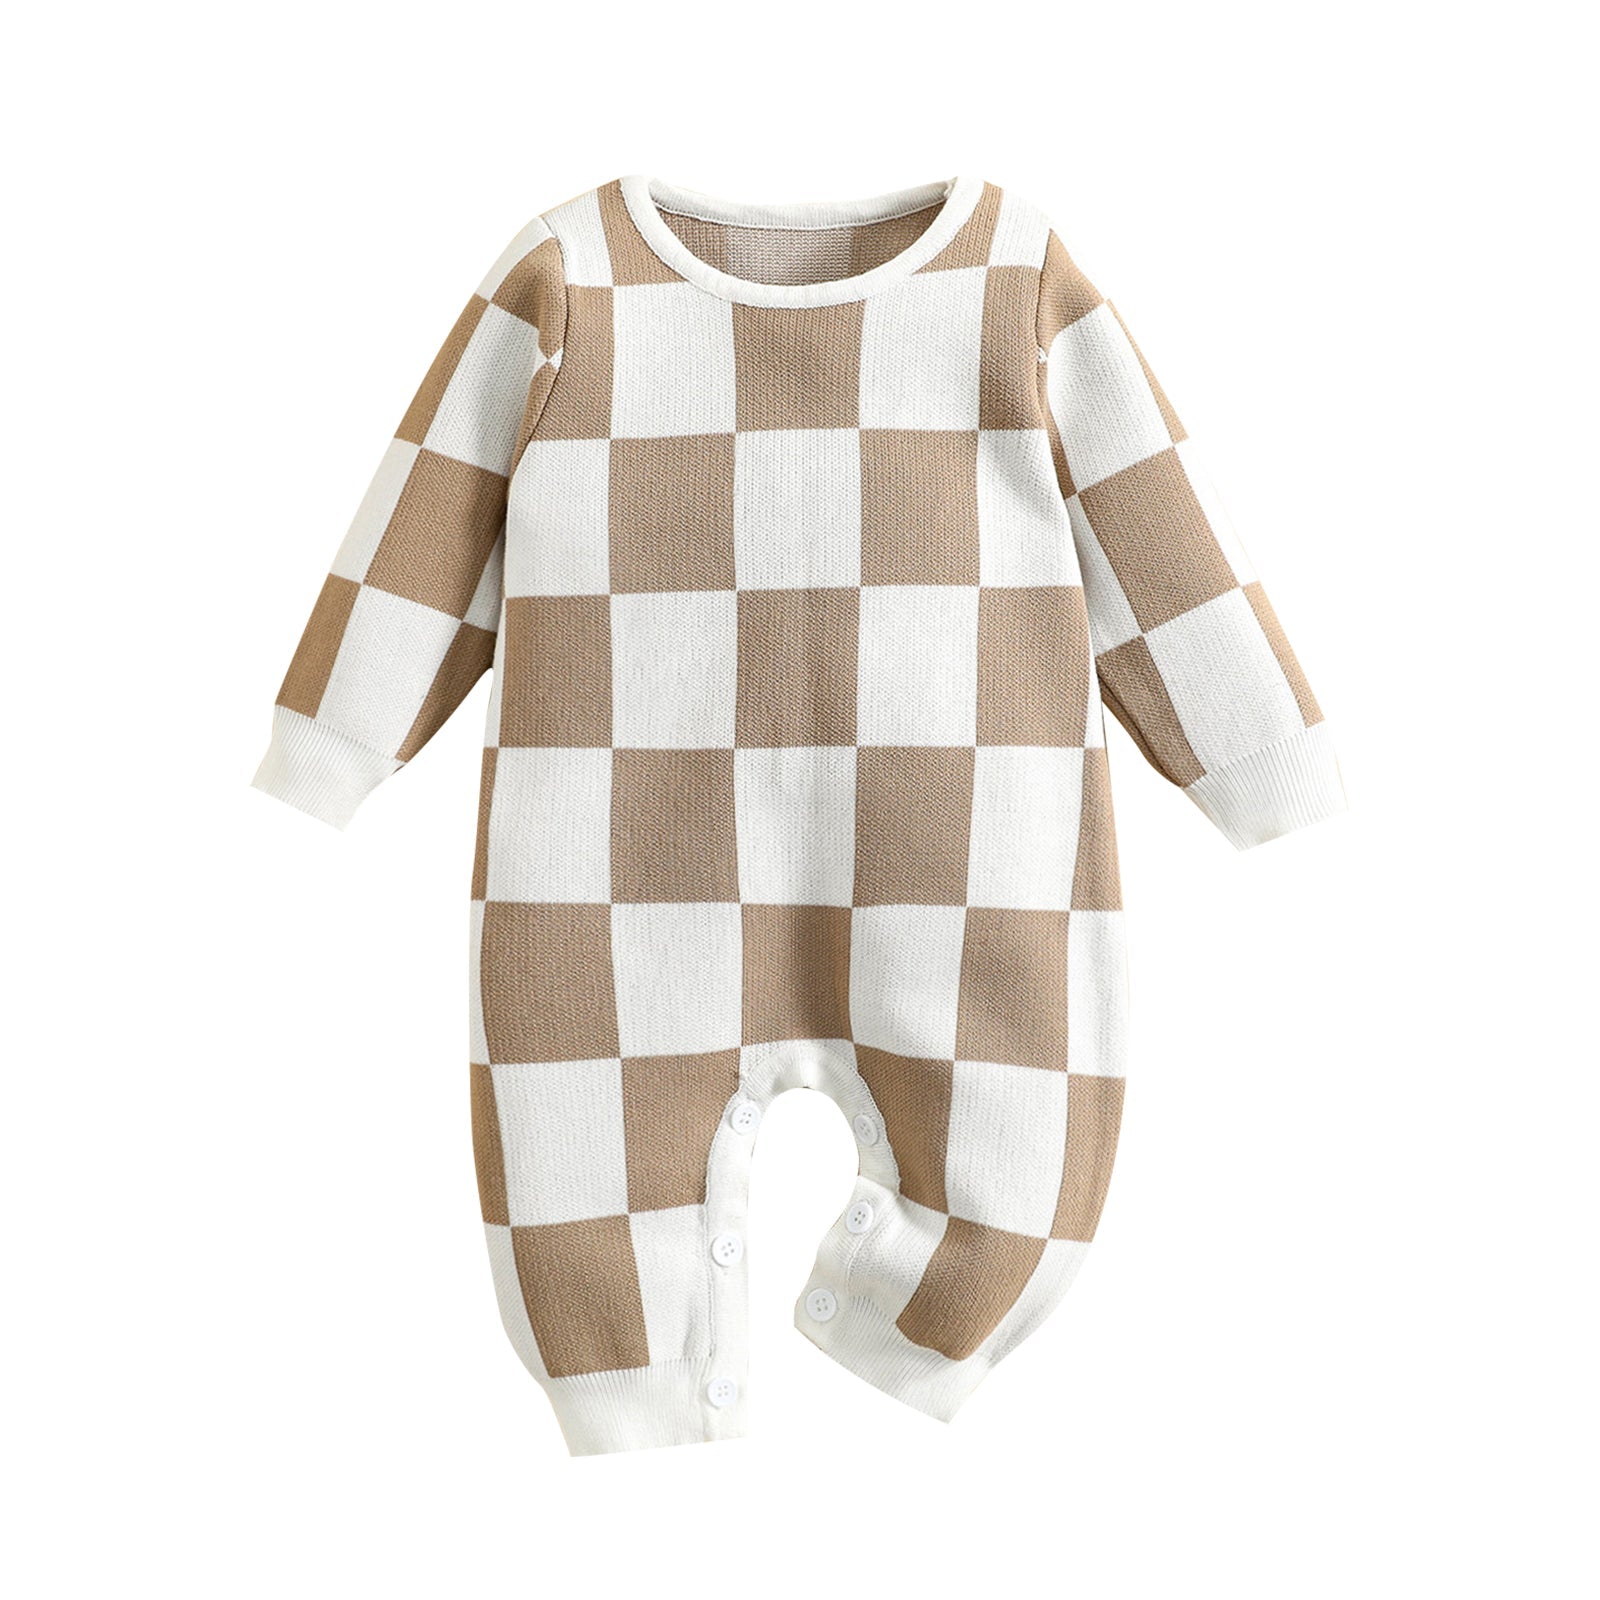 Baby Grid Print Jumpsuit.